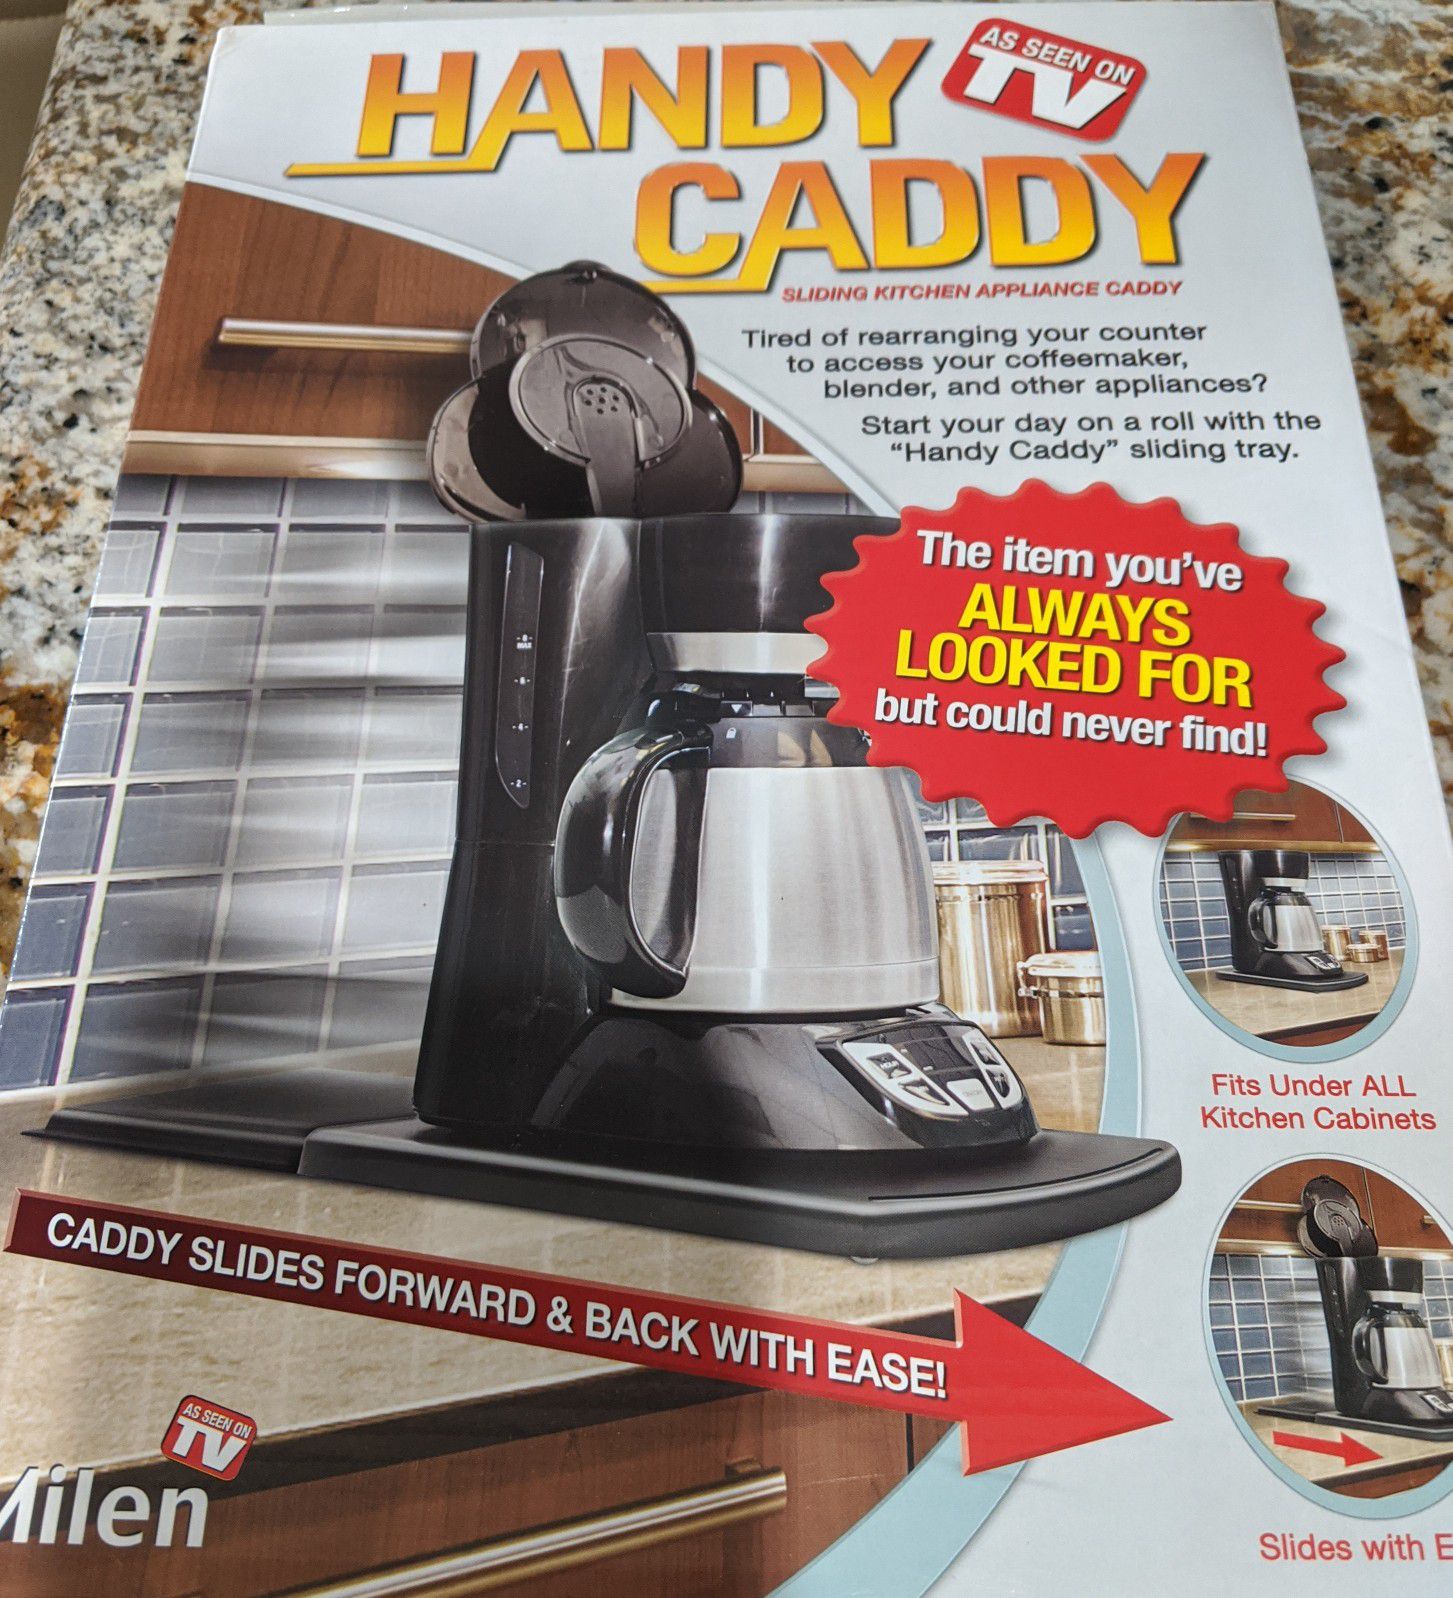 Handy Caddy Sliding kitchen Appliance